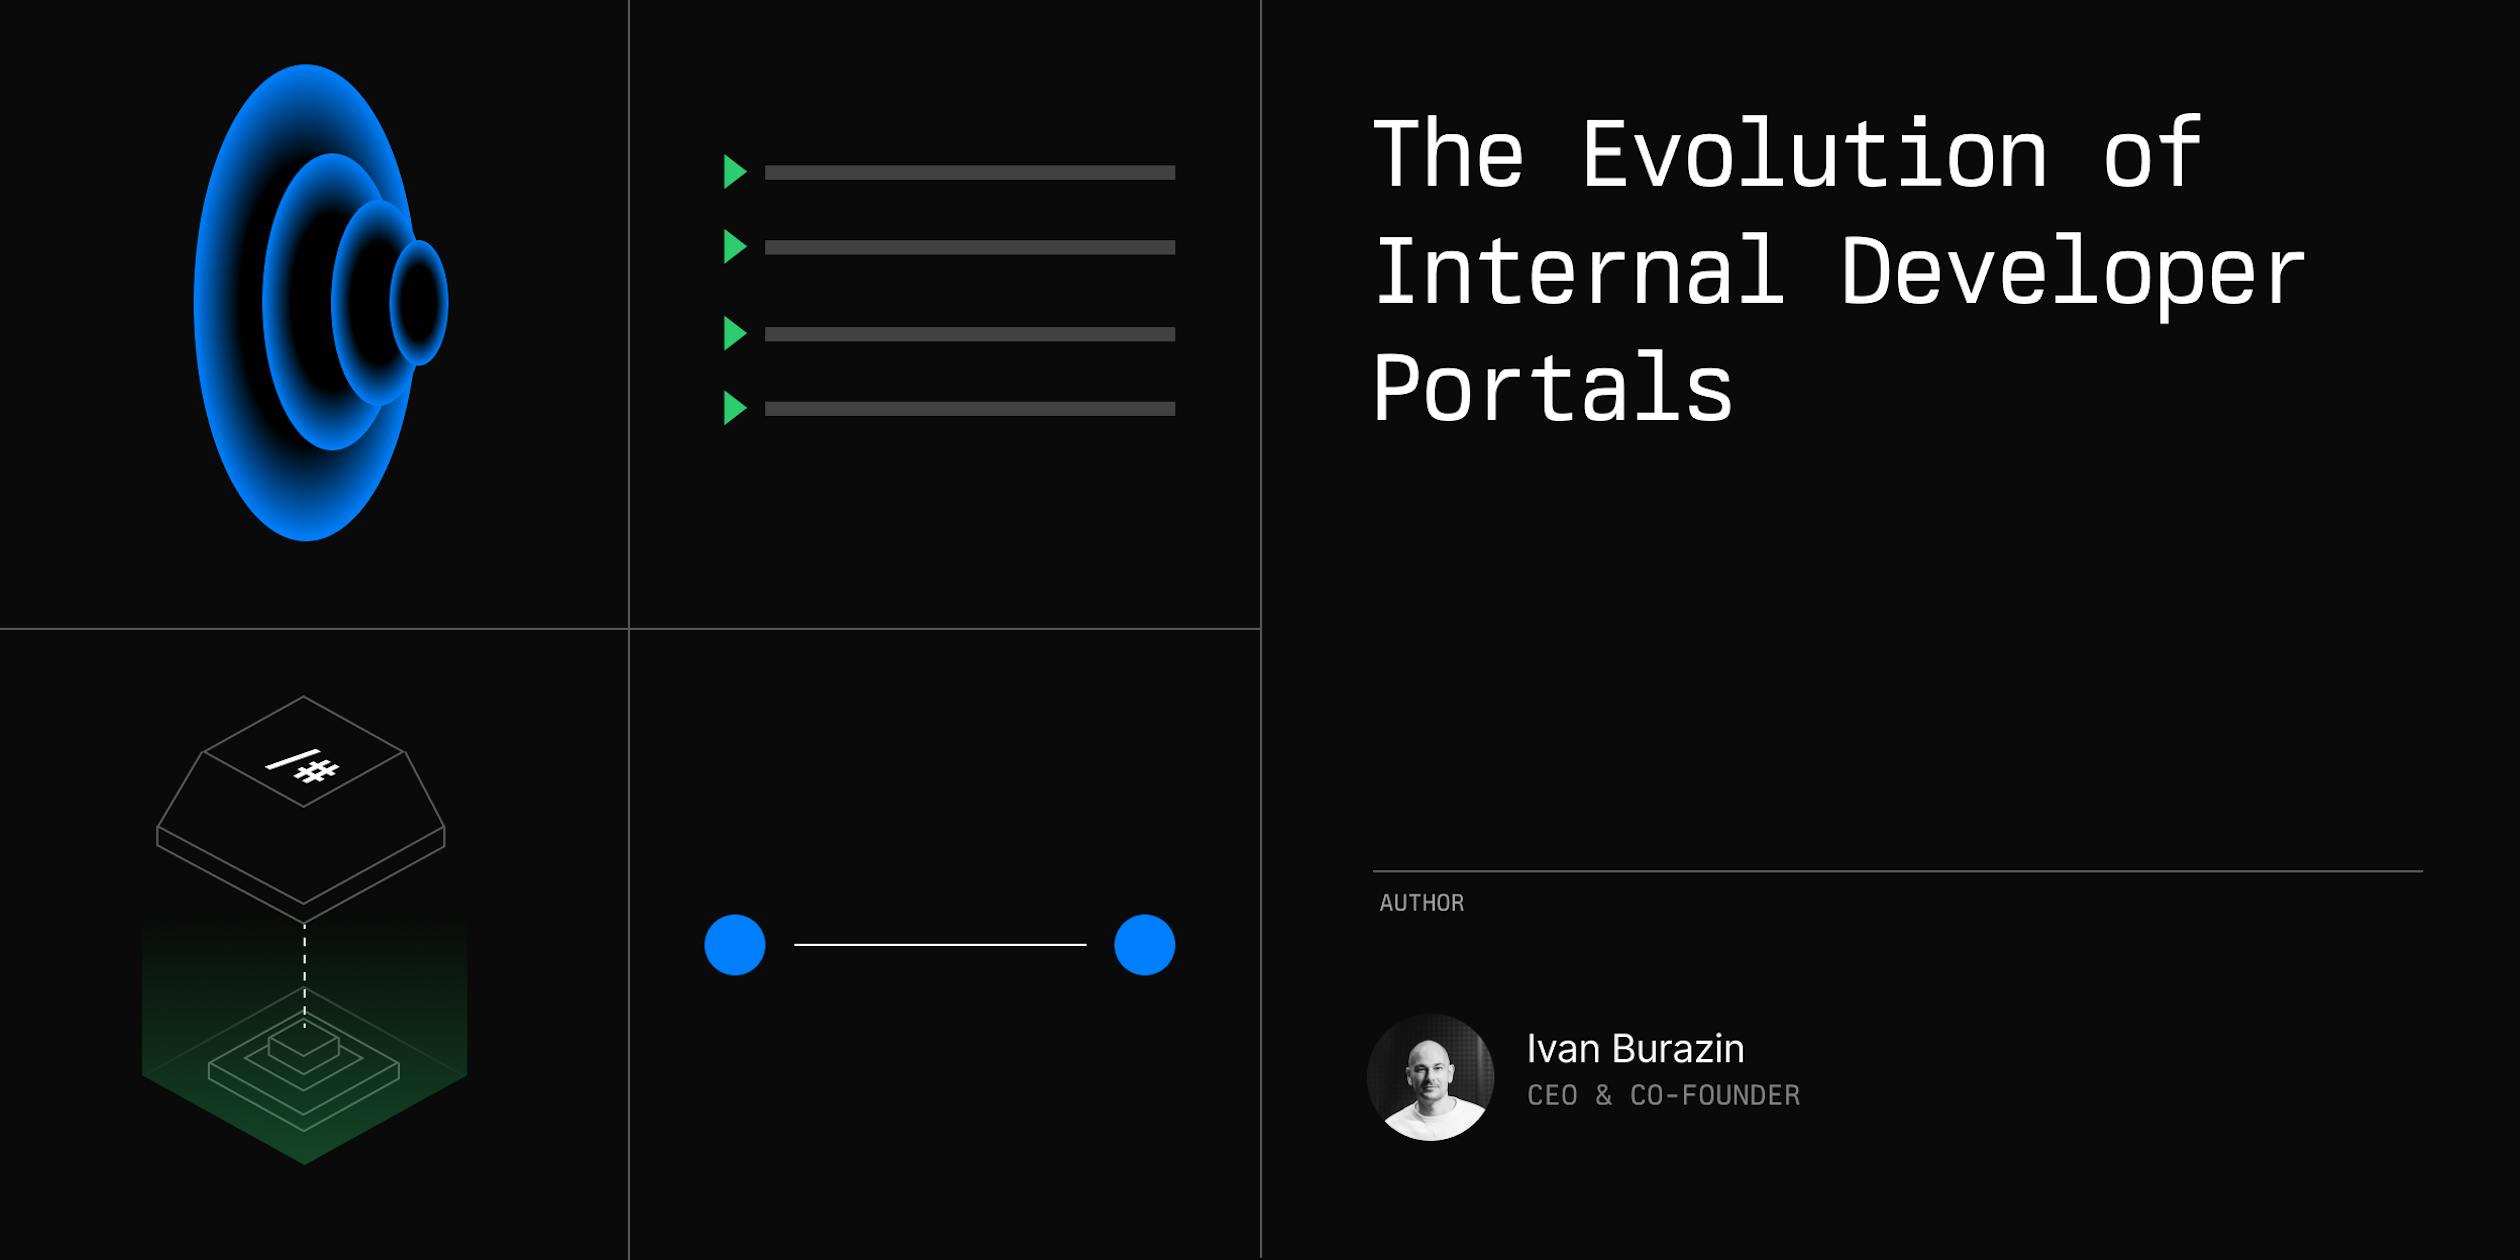 The Evolution of Internal Developer Portals